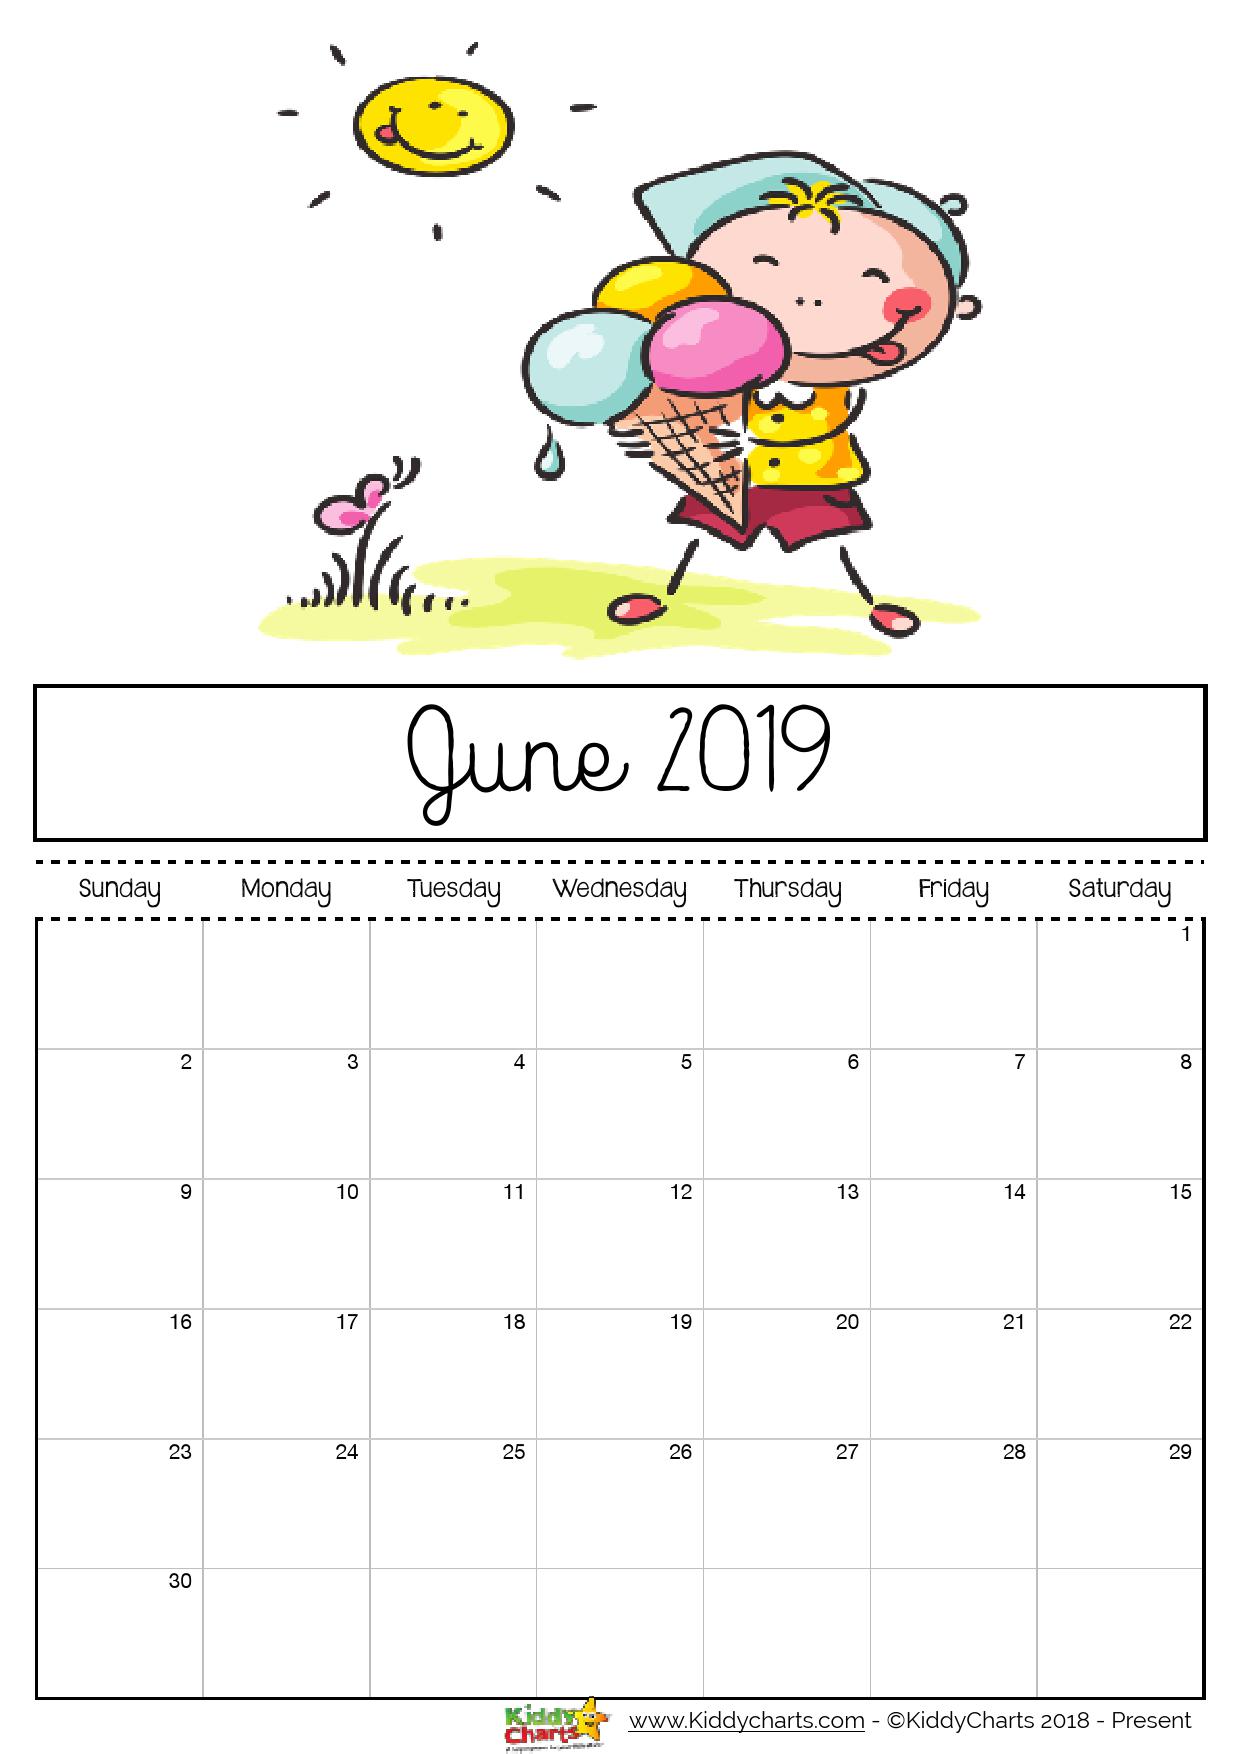 June printable 2019 calendar - boy eating ice cream in the sunshine; just like we hopefully will be very soon! #printables #kidsprintables #2019calendar